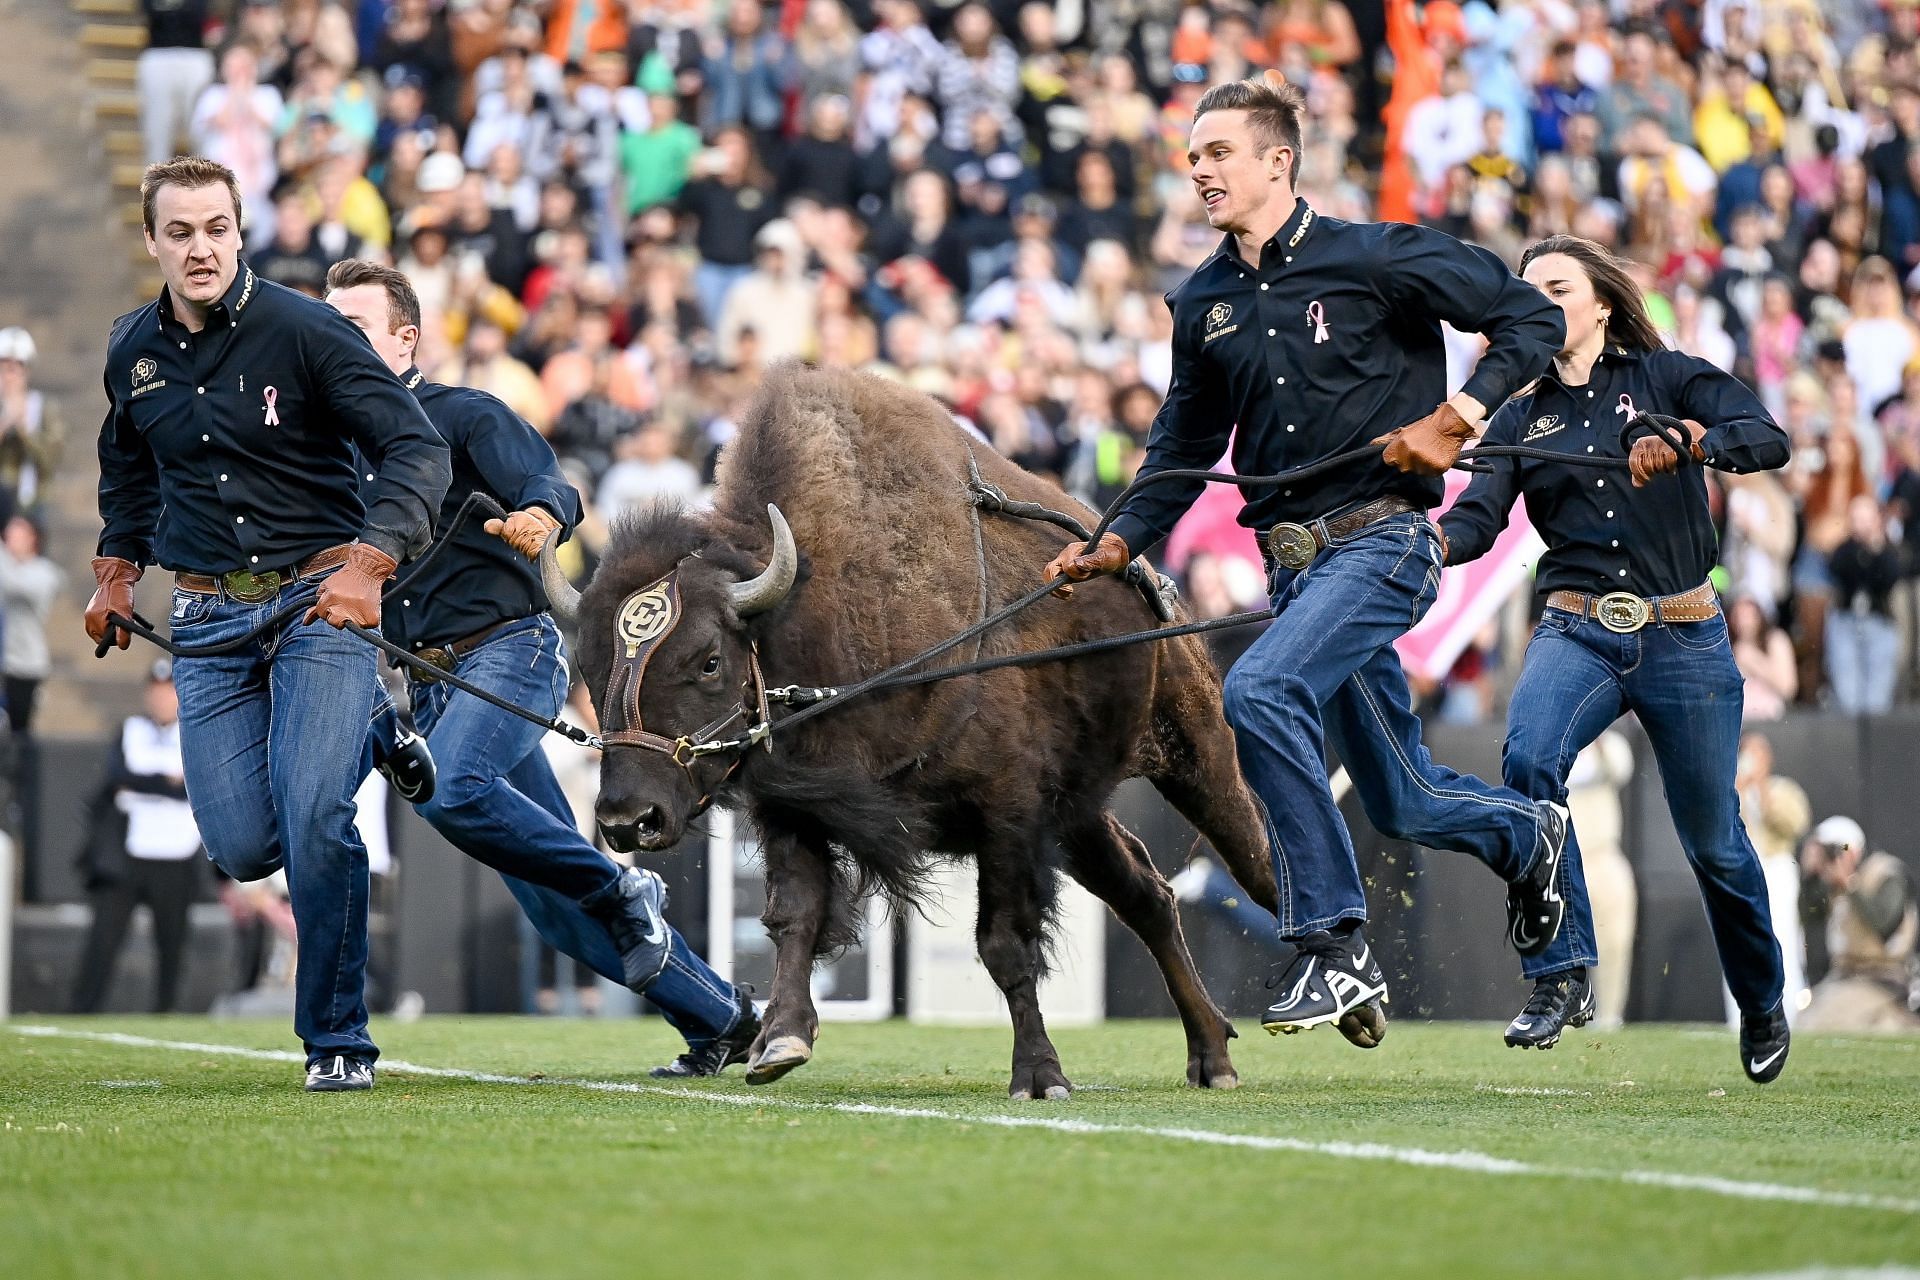 Colorado mascot Ralphie the Buffalo might be more popular than Coach Prime.